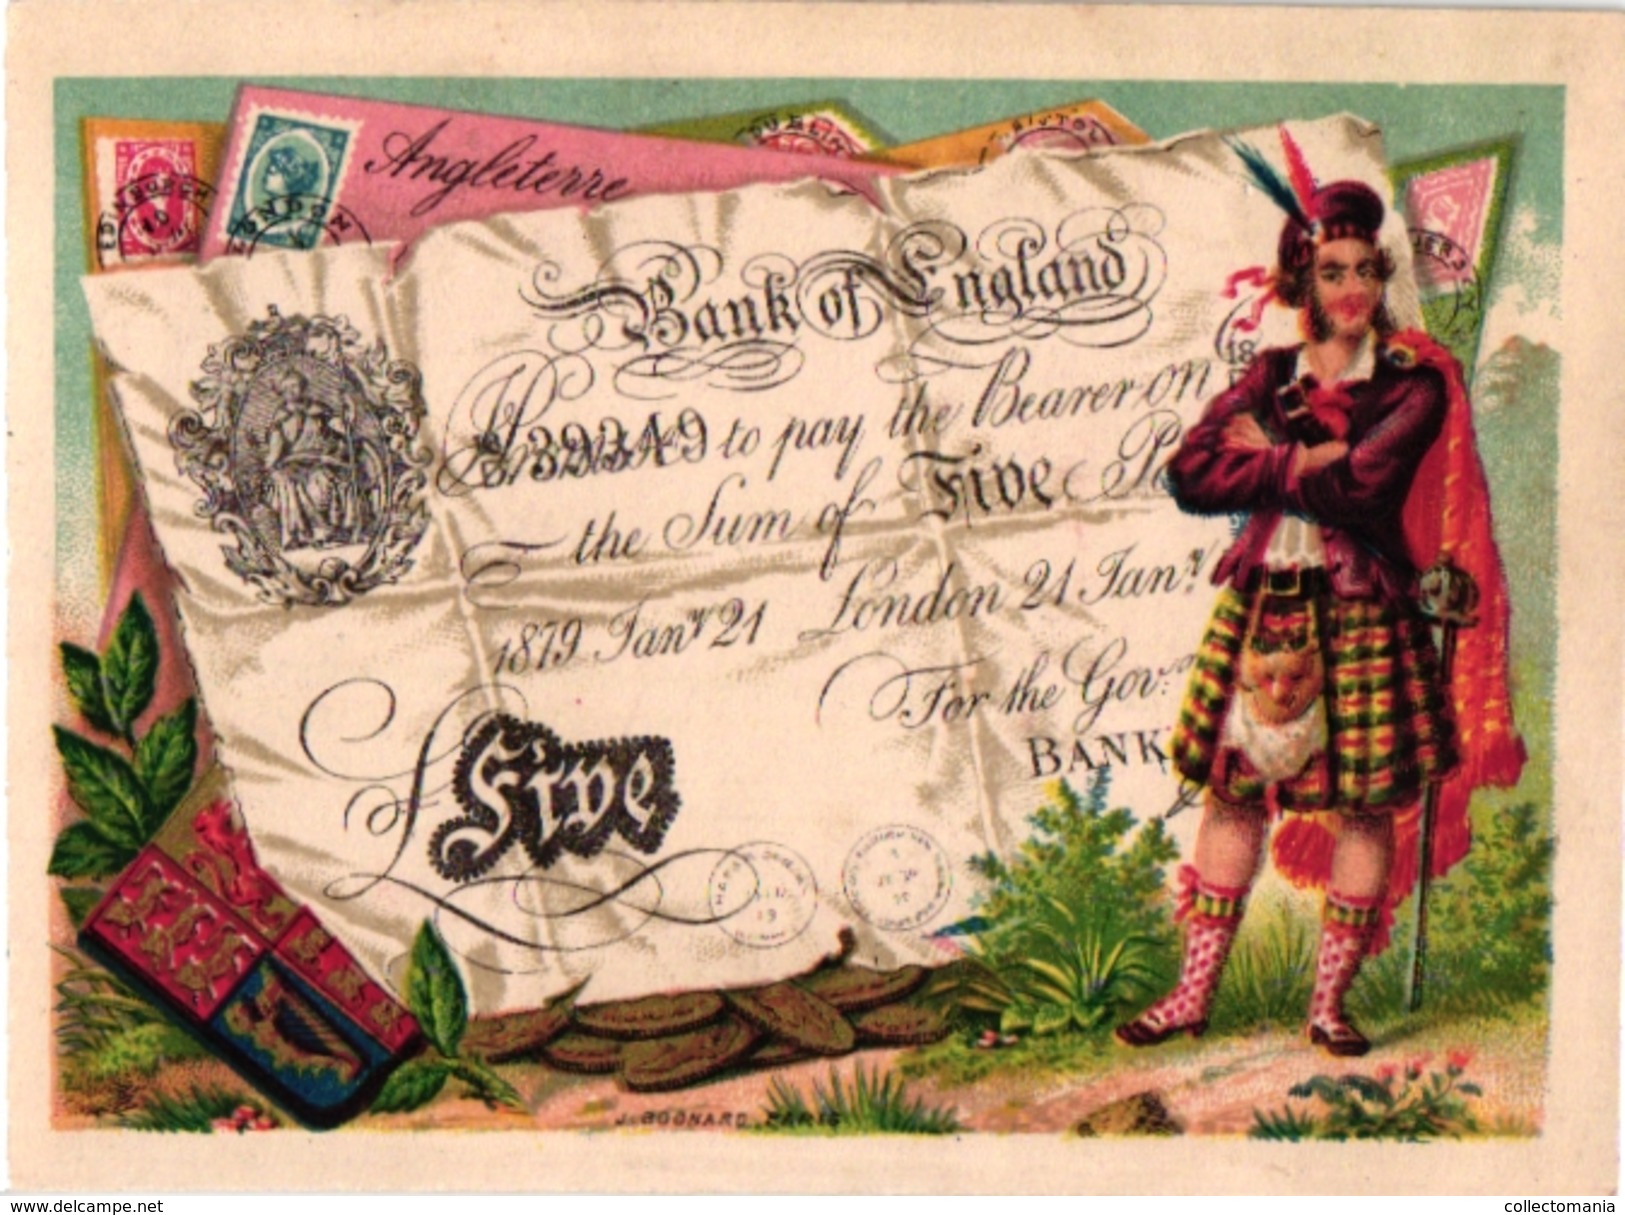 10 Trade Cards Chromo Full Serie Complet SPAIN ESPANA PUB La COLOSAL  CHOCOLATE  SANTANDER CALENDER CALENDARIO 1881 - Grand Format : ...-1900